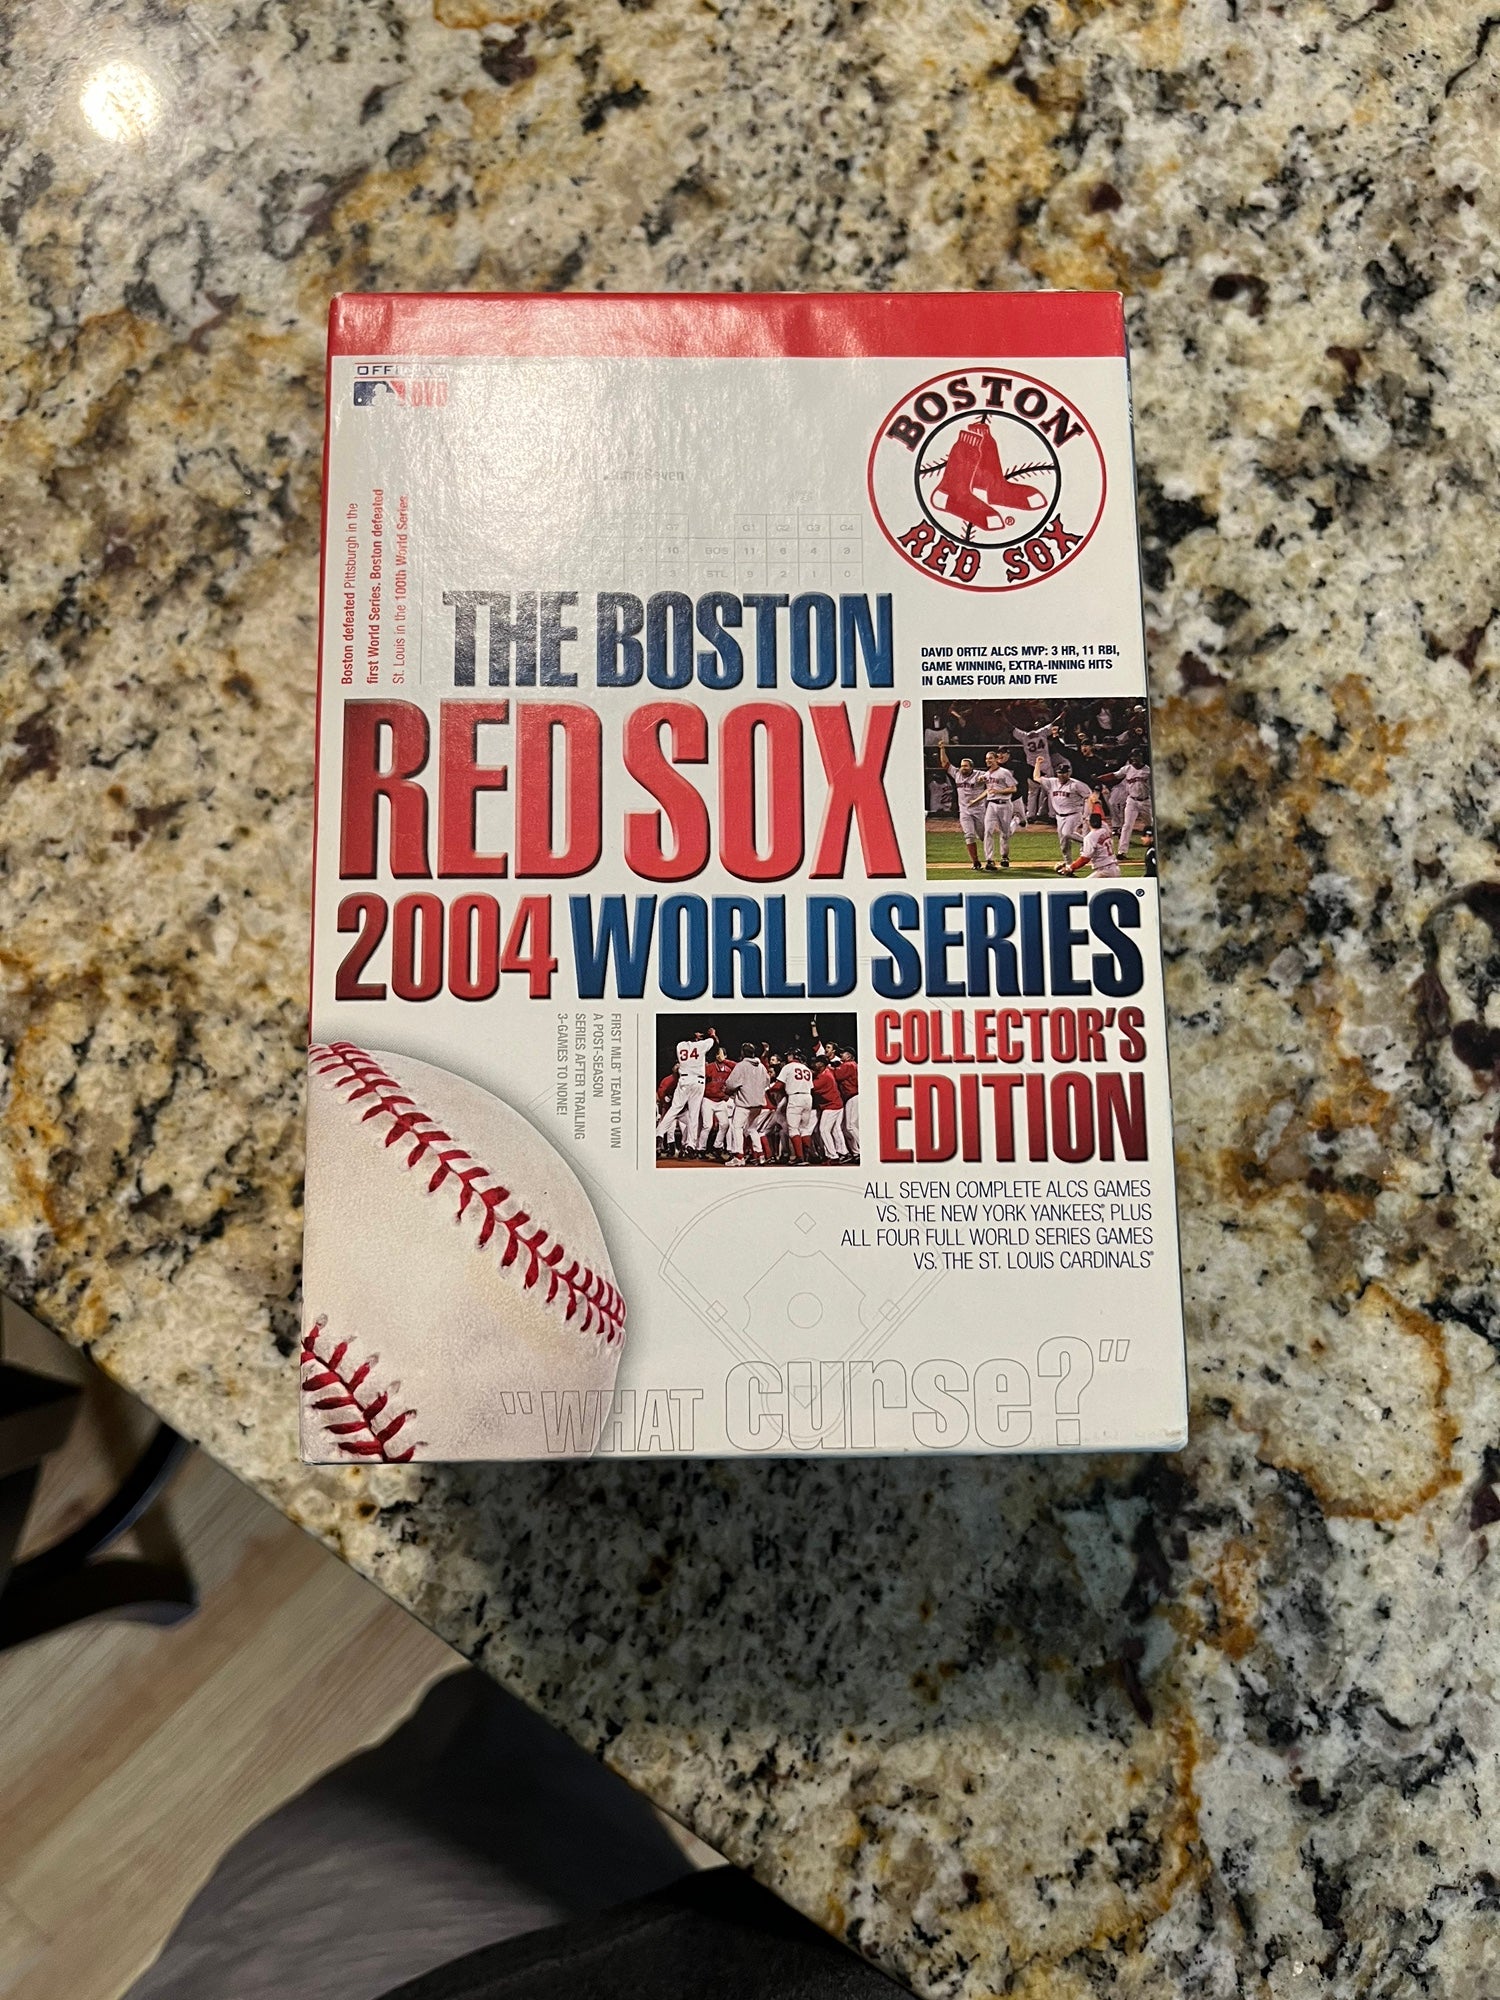 386 Boston Red Sox 2004 World Series Champions Stock Photos, High